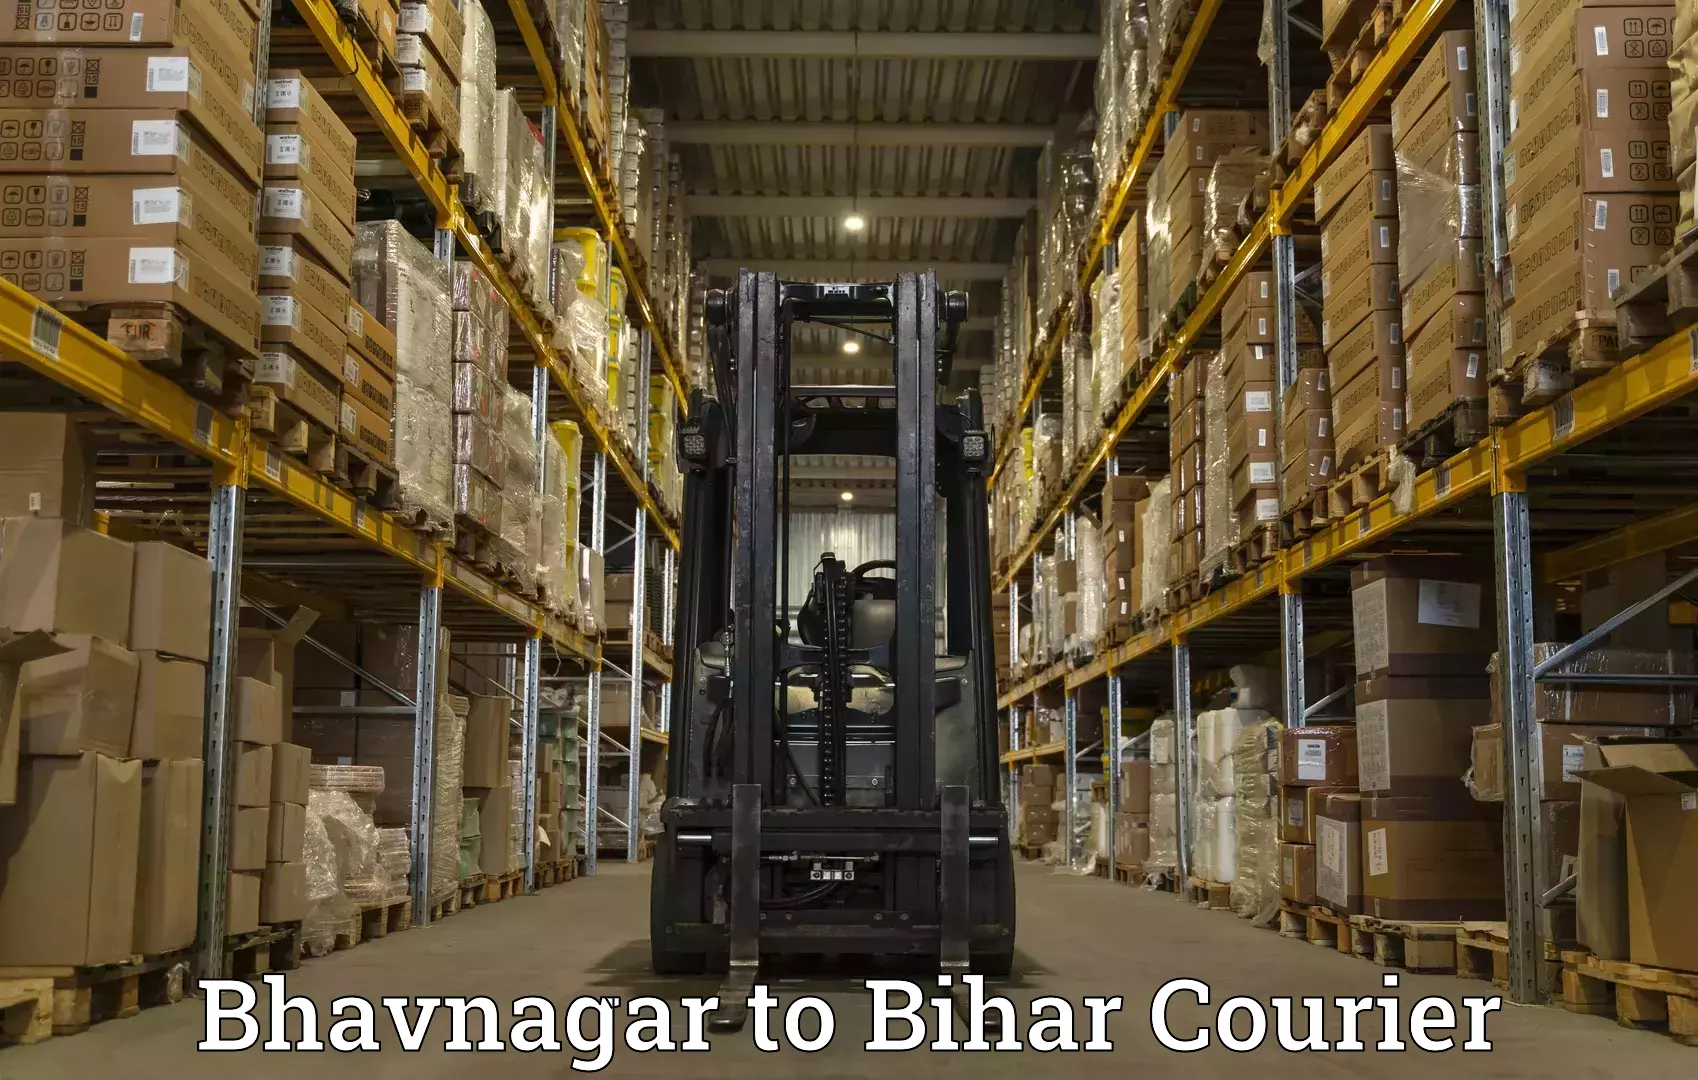 Courier service comparison Bhavnagar to Saraiya